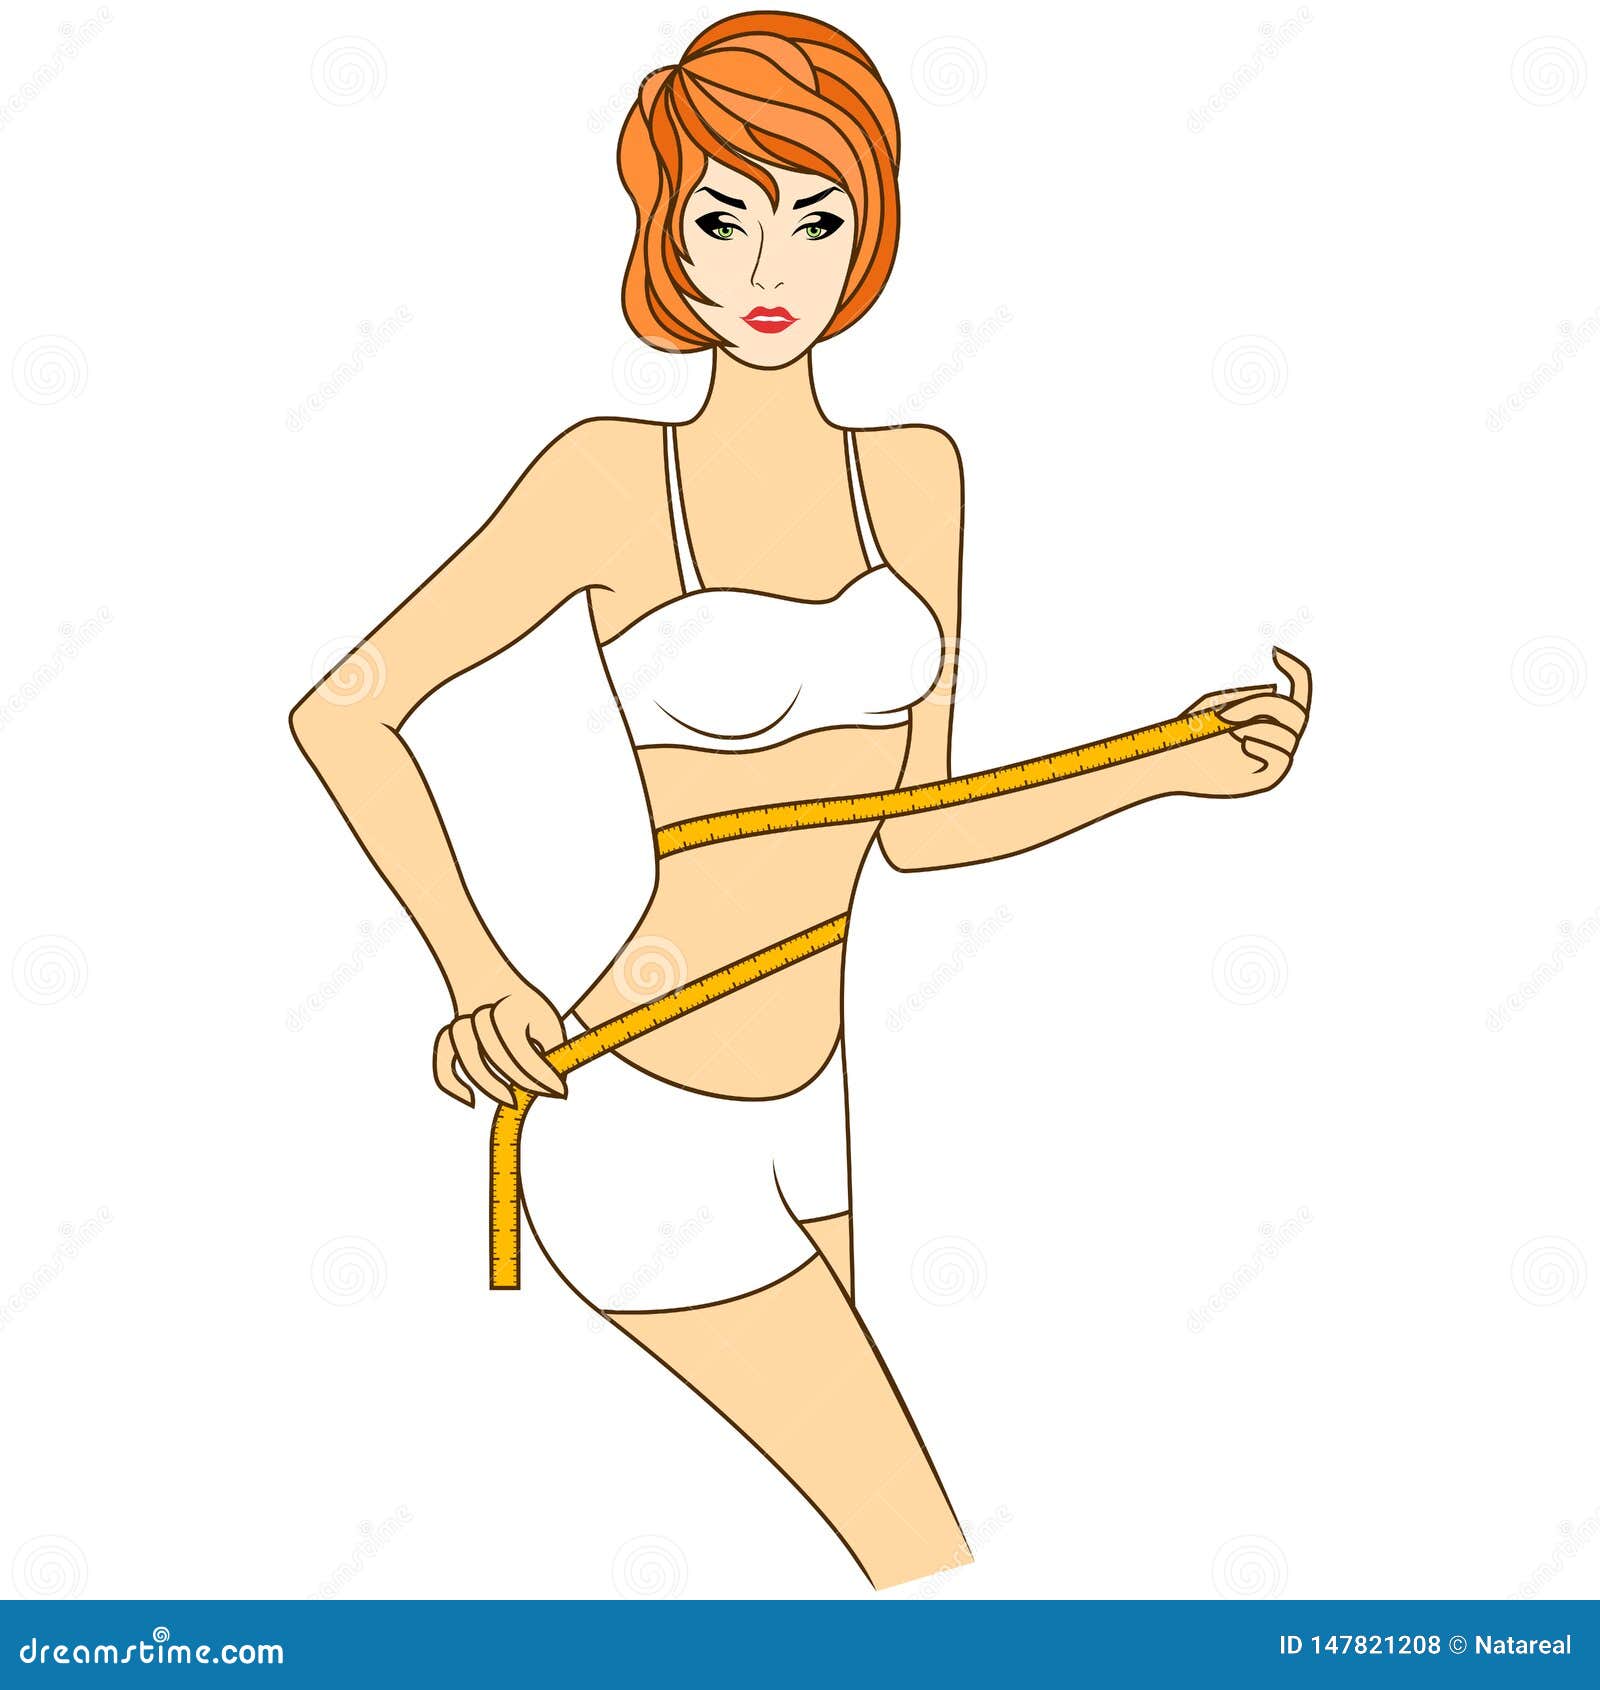 Slim woman body with measuring tape around waist Vector Image